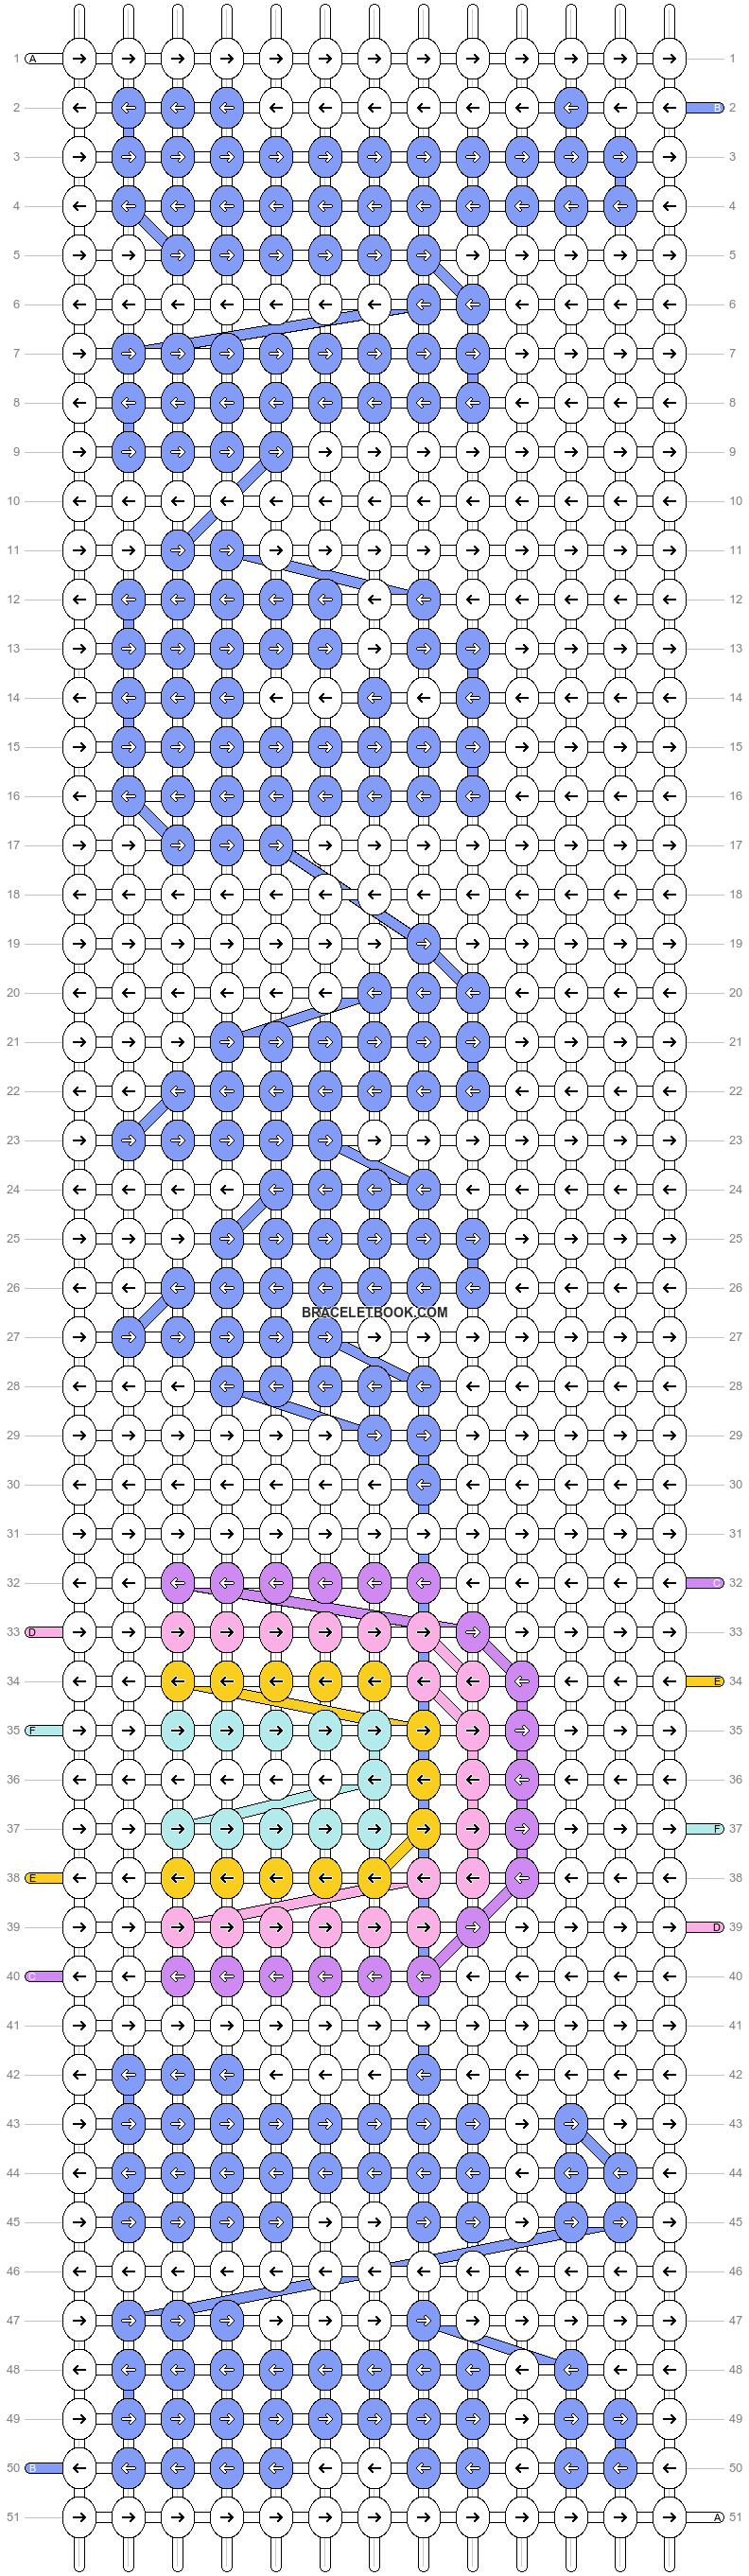 Alpha pattern #54134 variation #93640 pattern